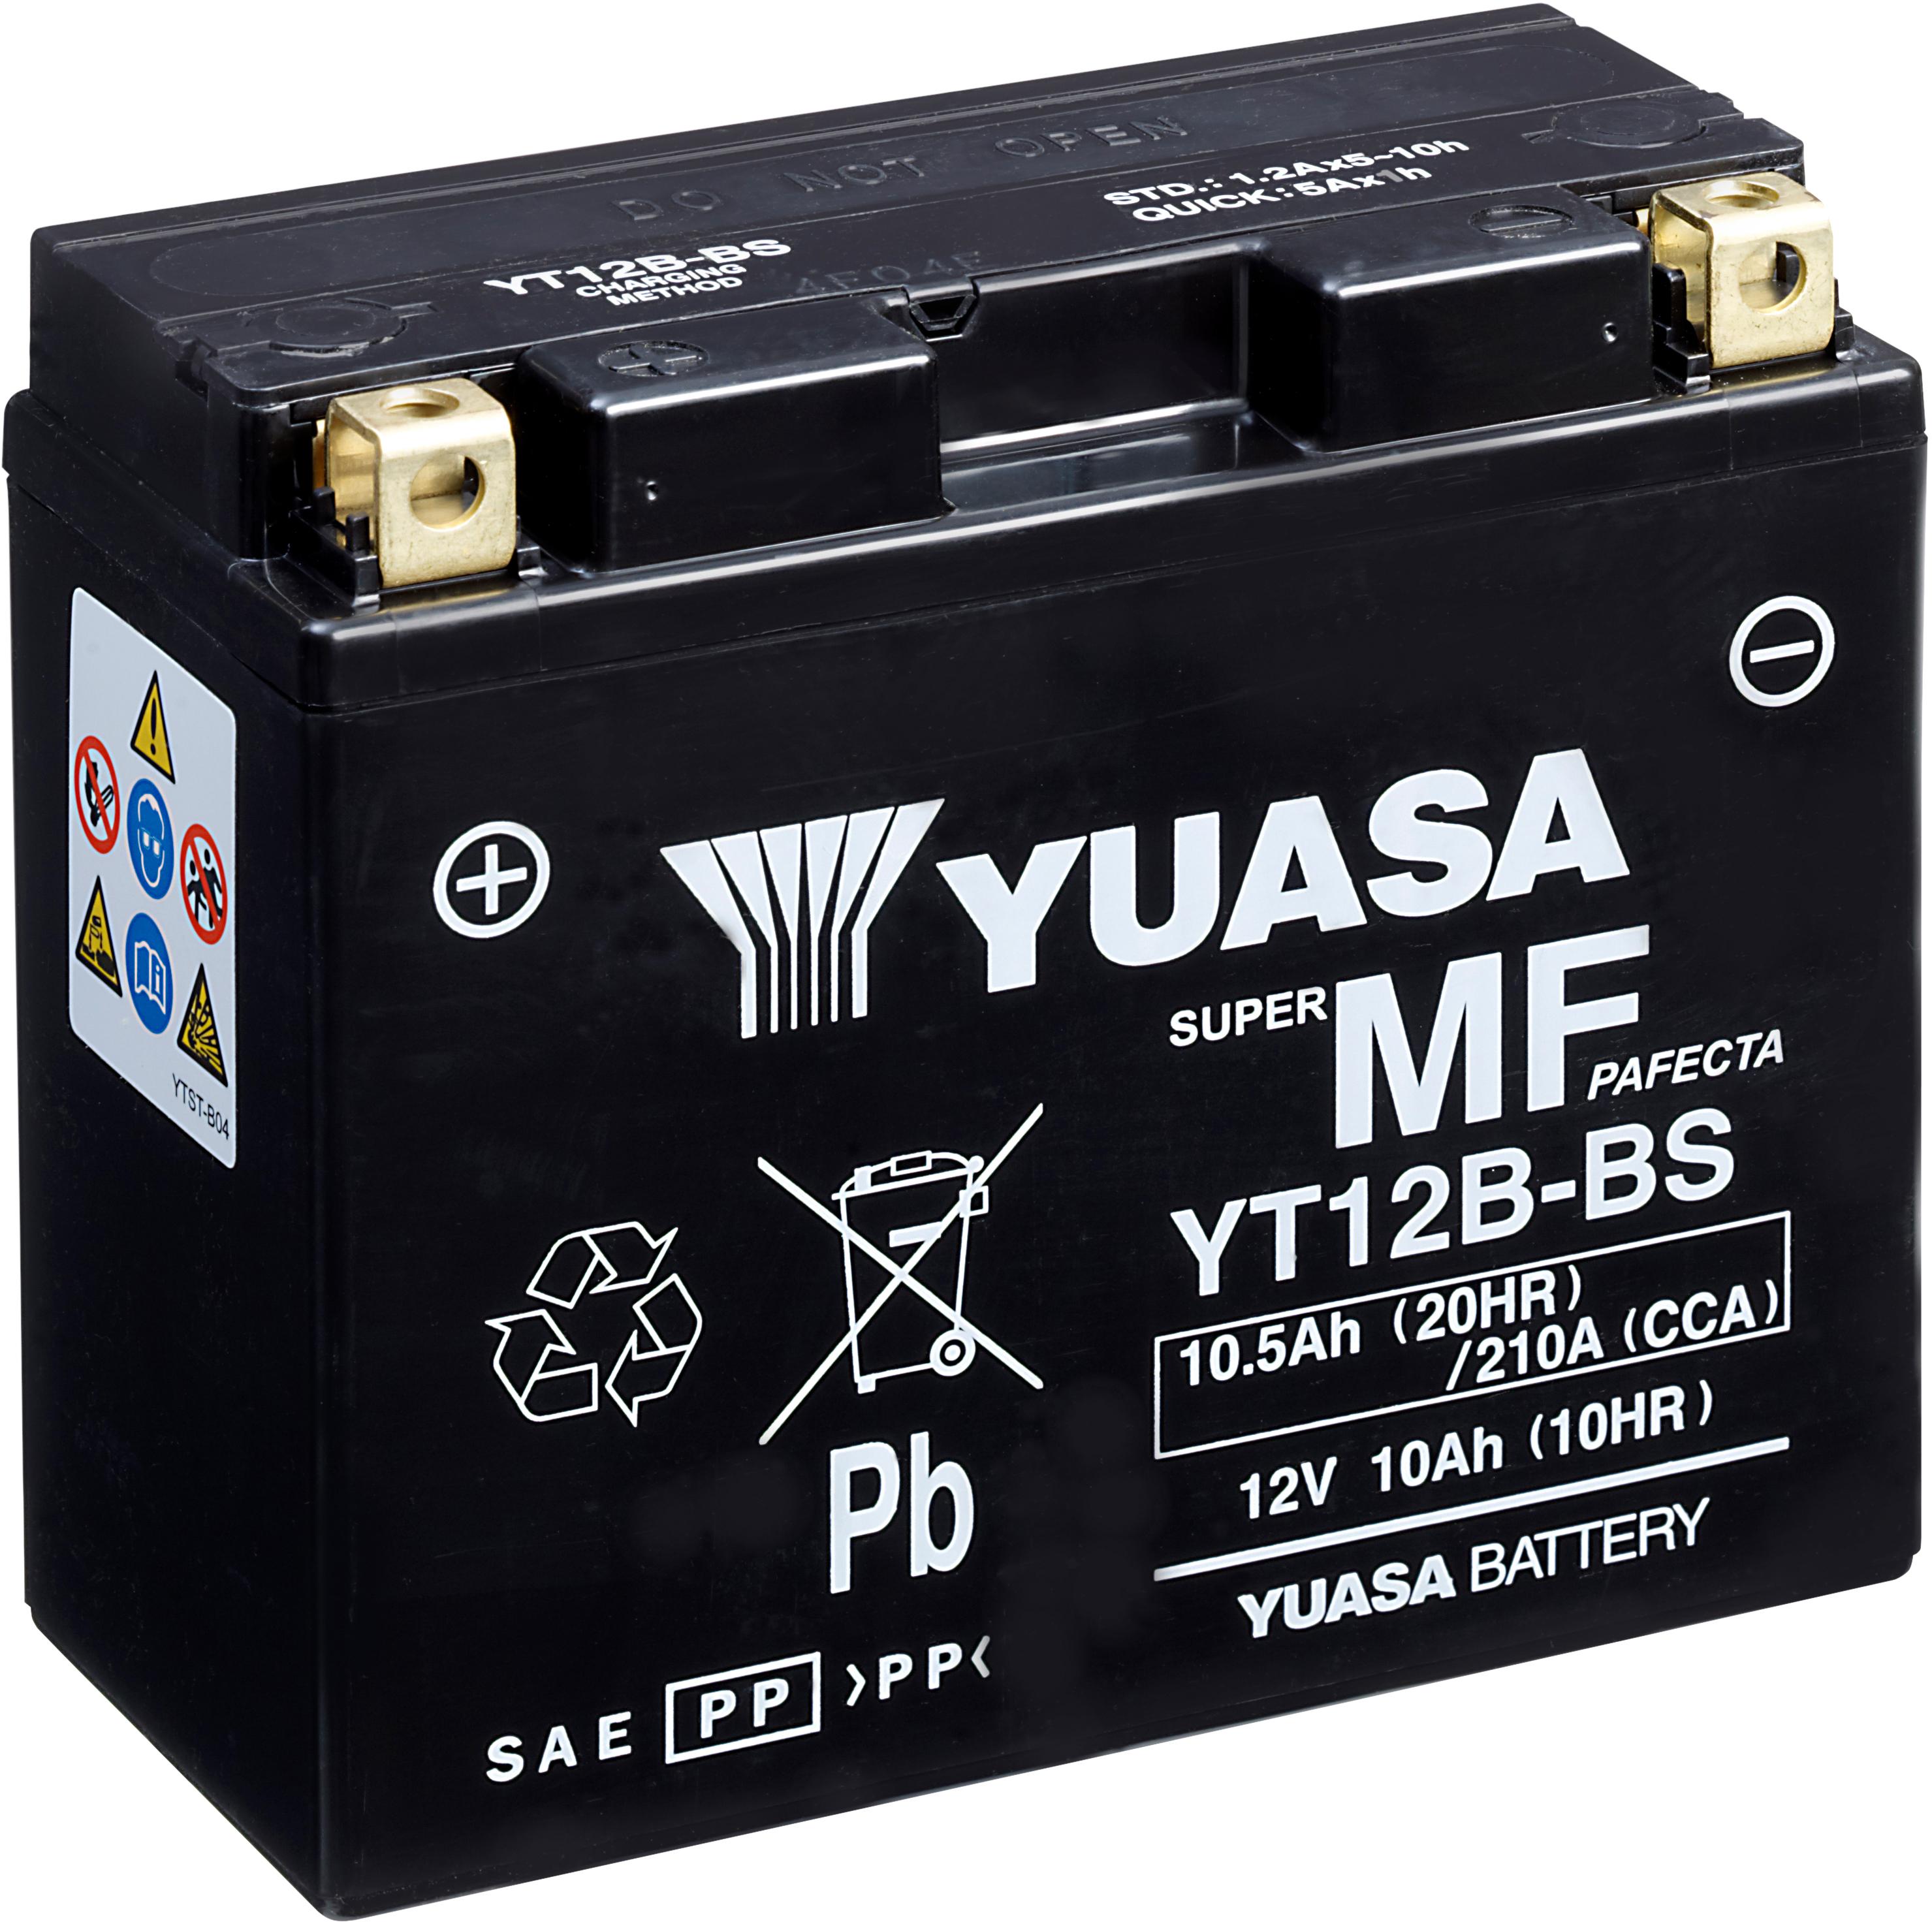 Yuasa Yt12B-Bs Maintenance Free Motorcycle Battery